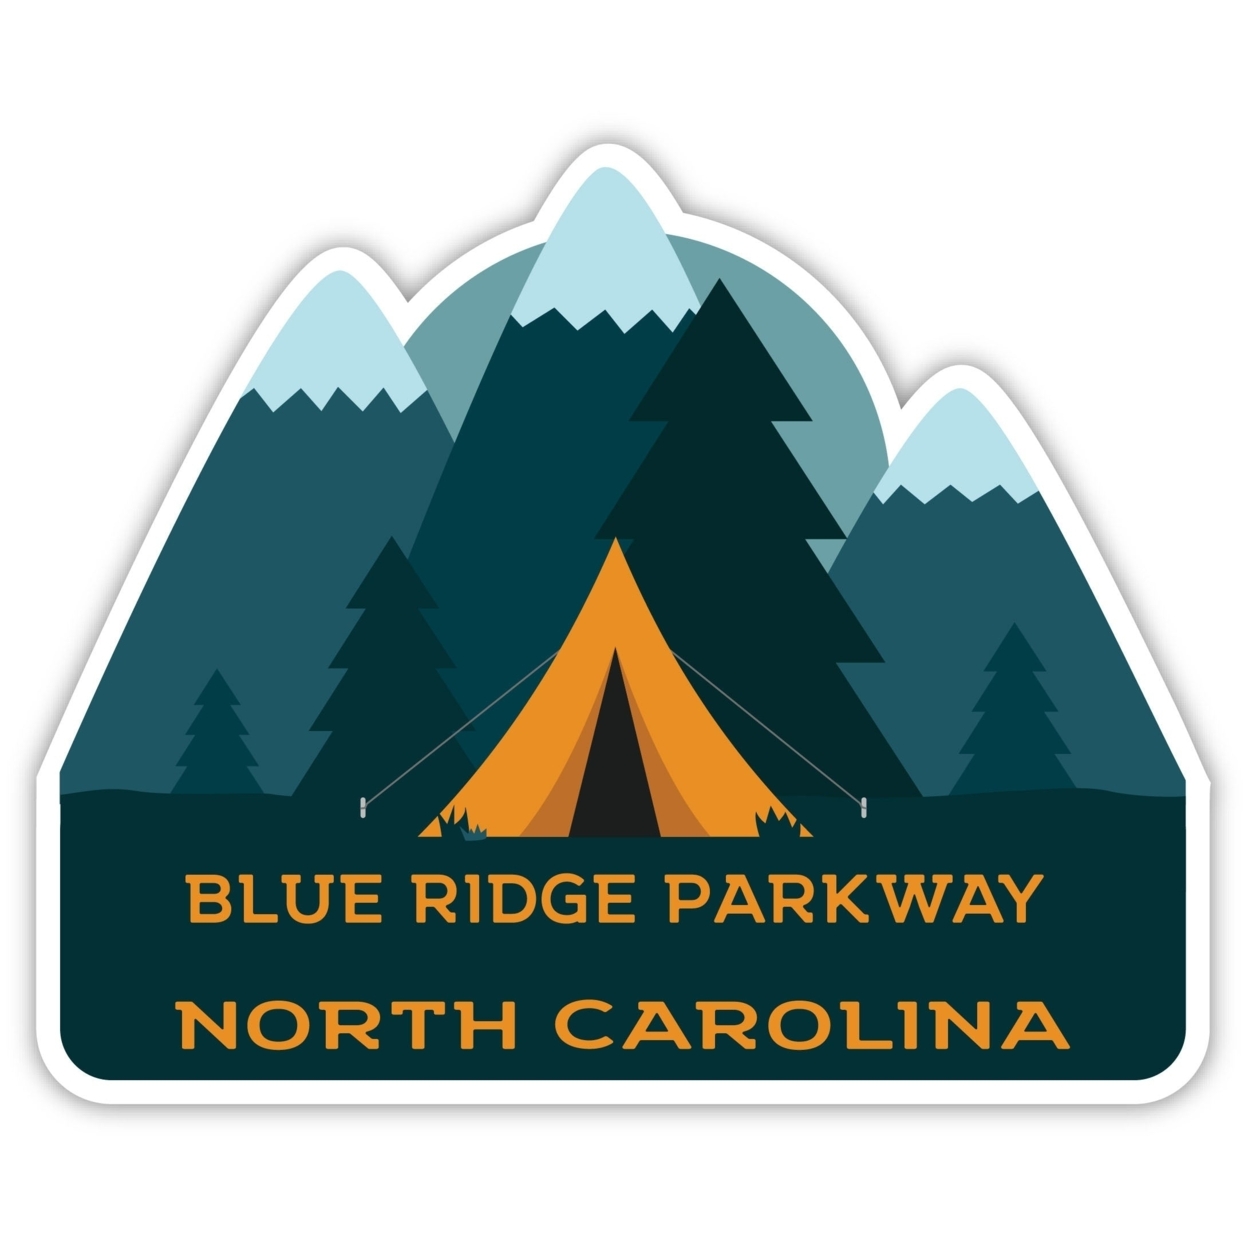 Blue Ridge Parkway North Carolina Souvenir Decorative Stickers (Choose Theme And Size) - 4-Pack, 4-Inch, Tent